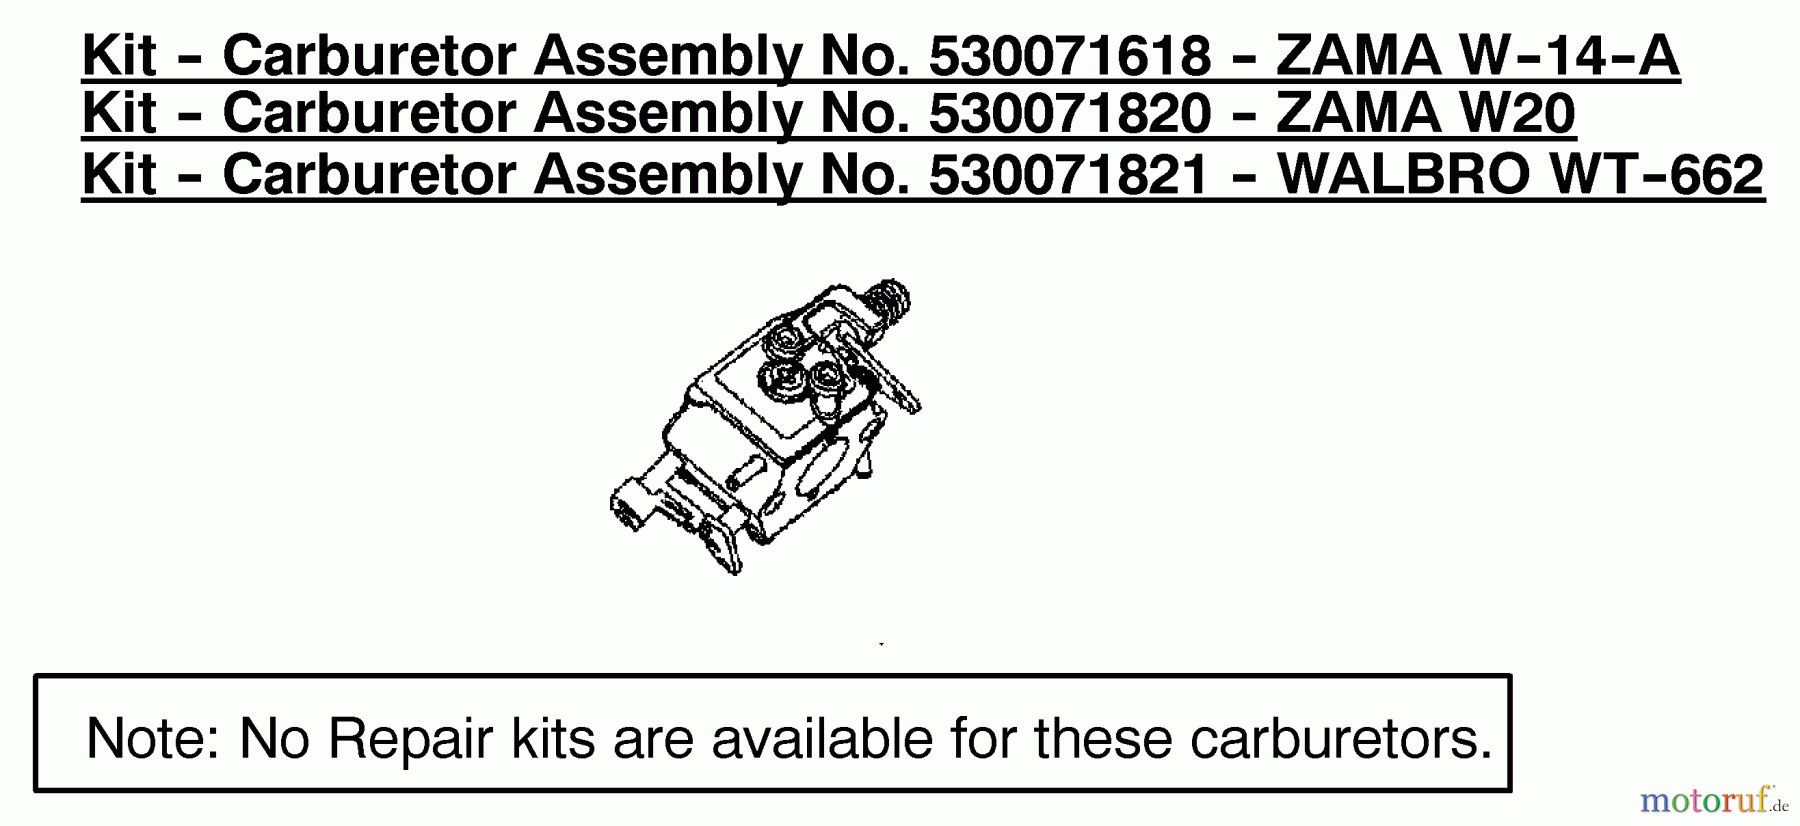  Poulan / Weed Eater Motorsägen 1975 (Type 7) - Poulan Woodshark Chainsaw Carburetor Assembly (Zama W-14-A) P/N 530071618